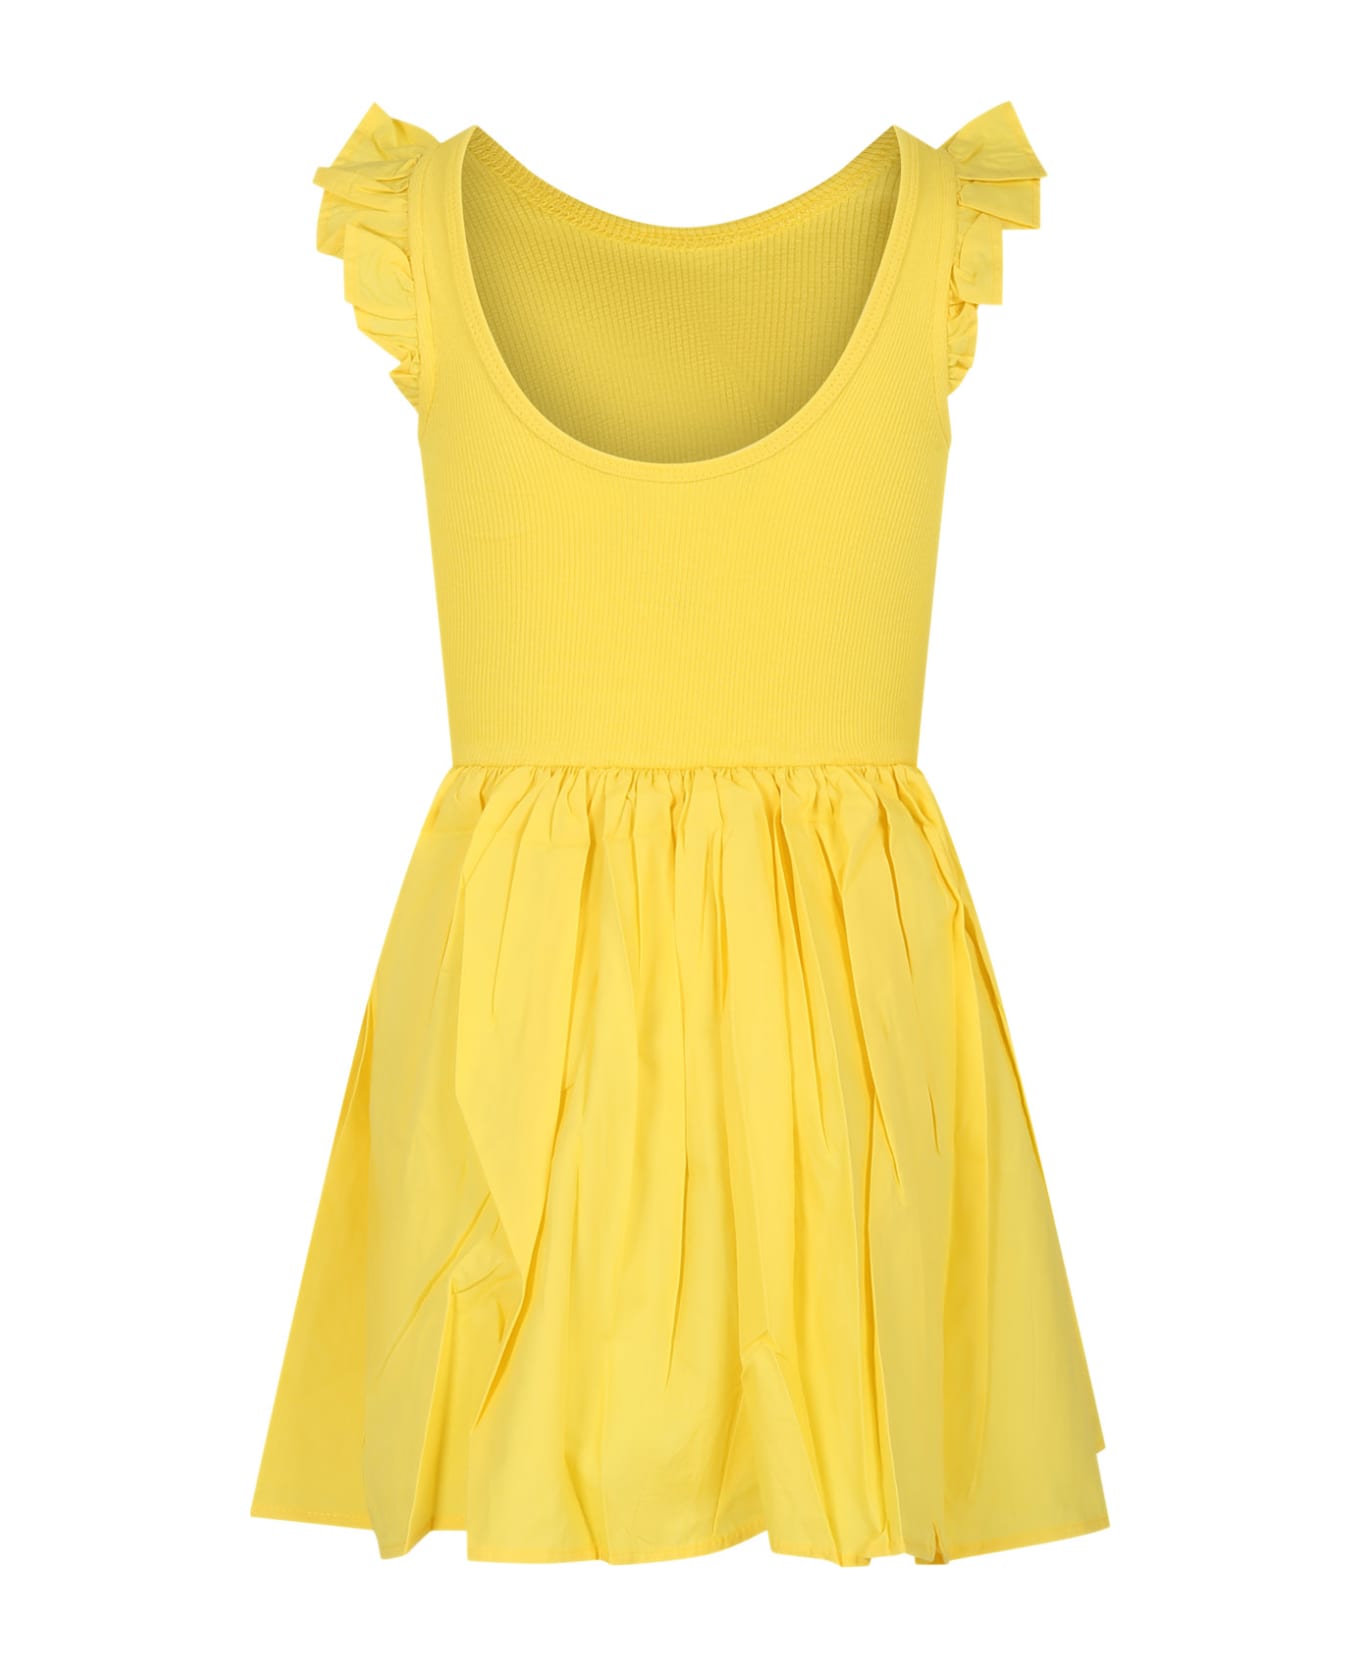 Molo Yellow Dress For Girl - Yellow